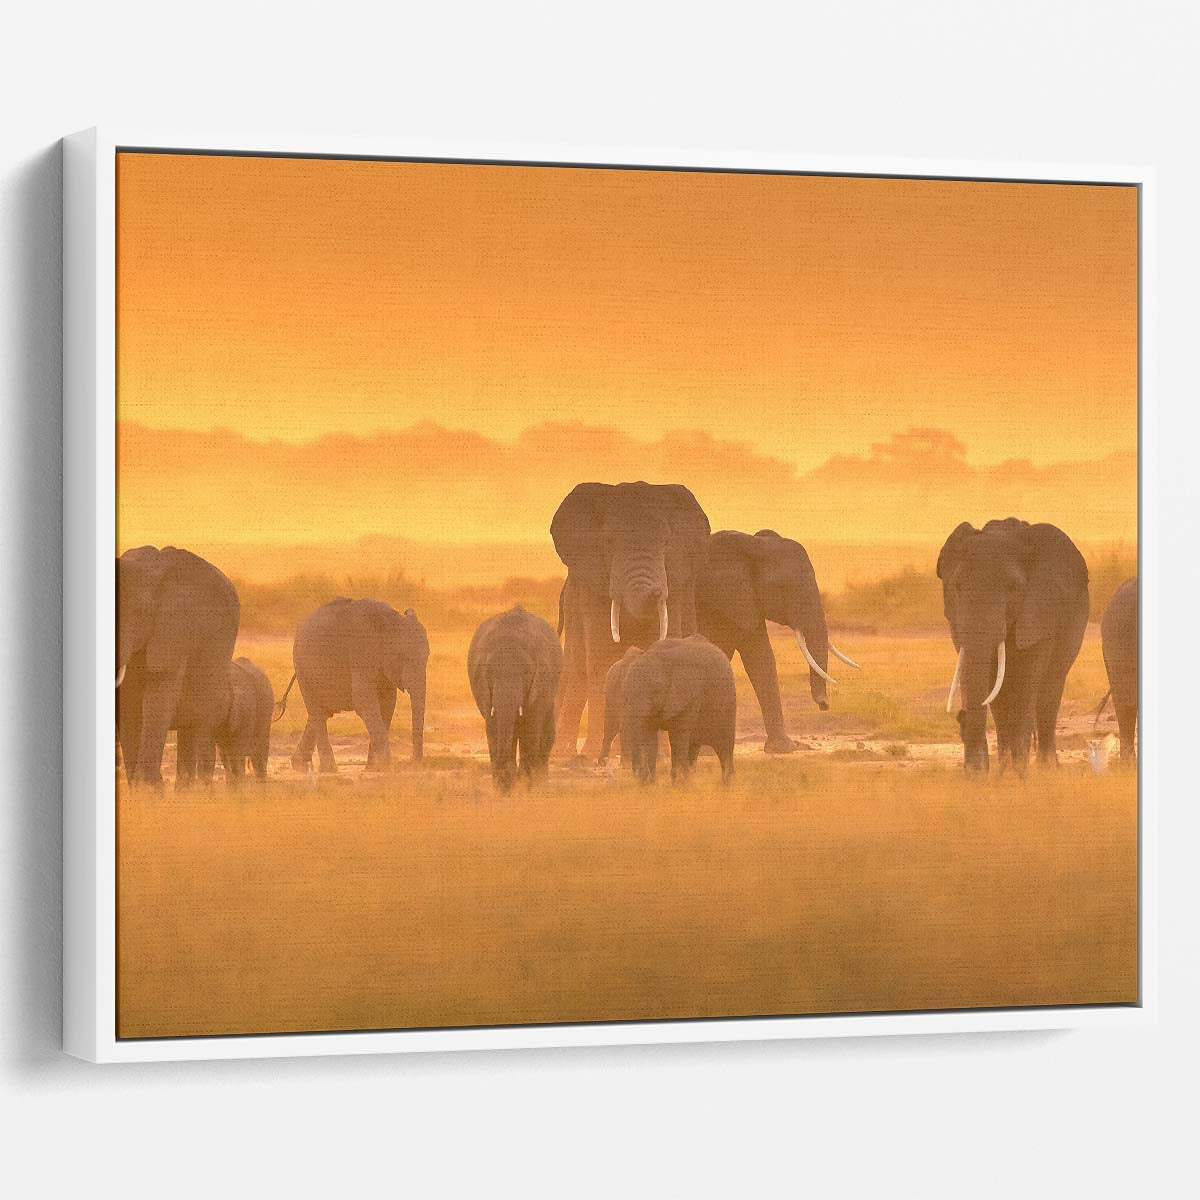 Majestic Amboseli Elephant Herd Sunset Panorama Wall Art by Luxuriance Designs. Made in USA.